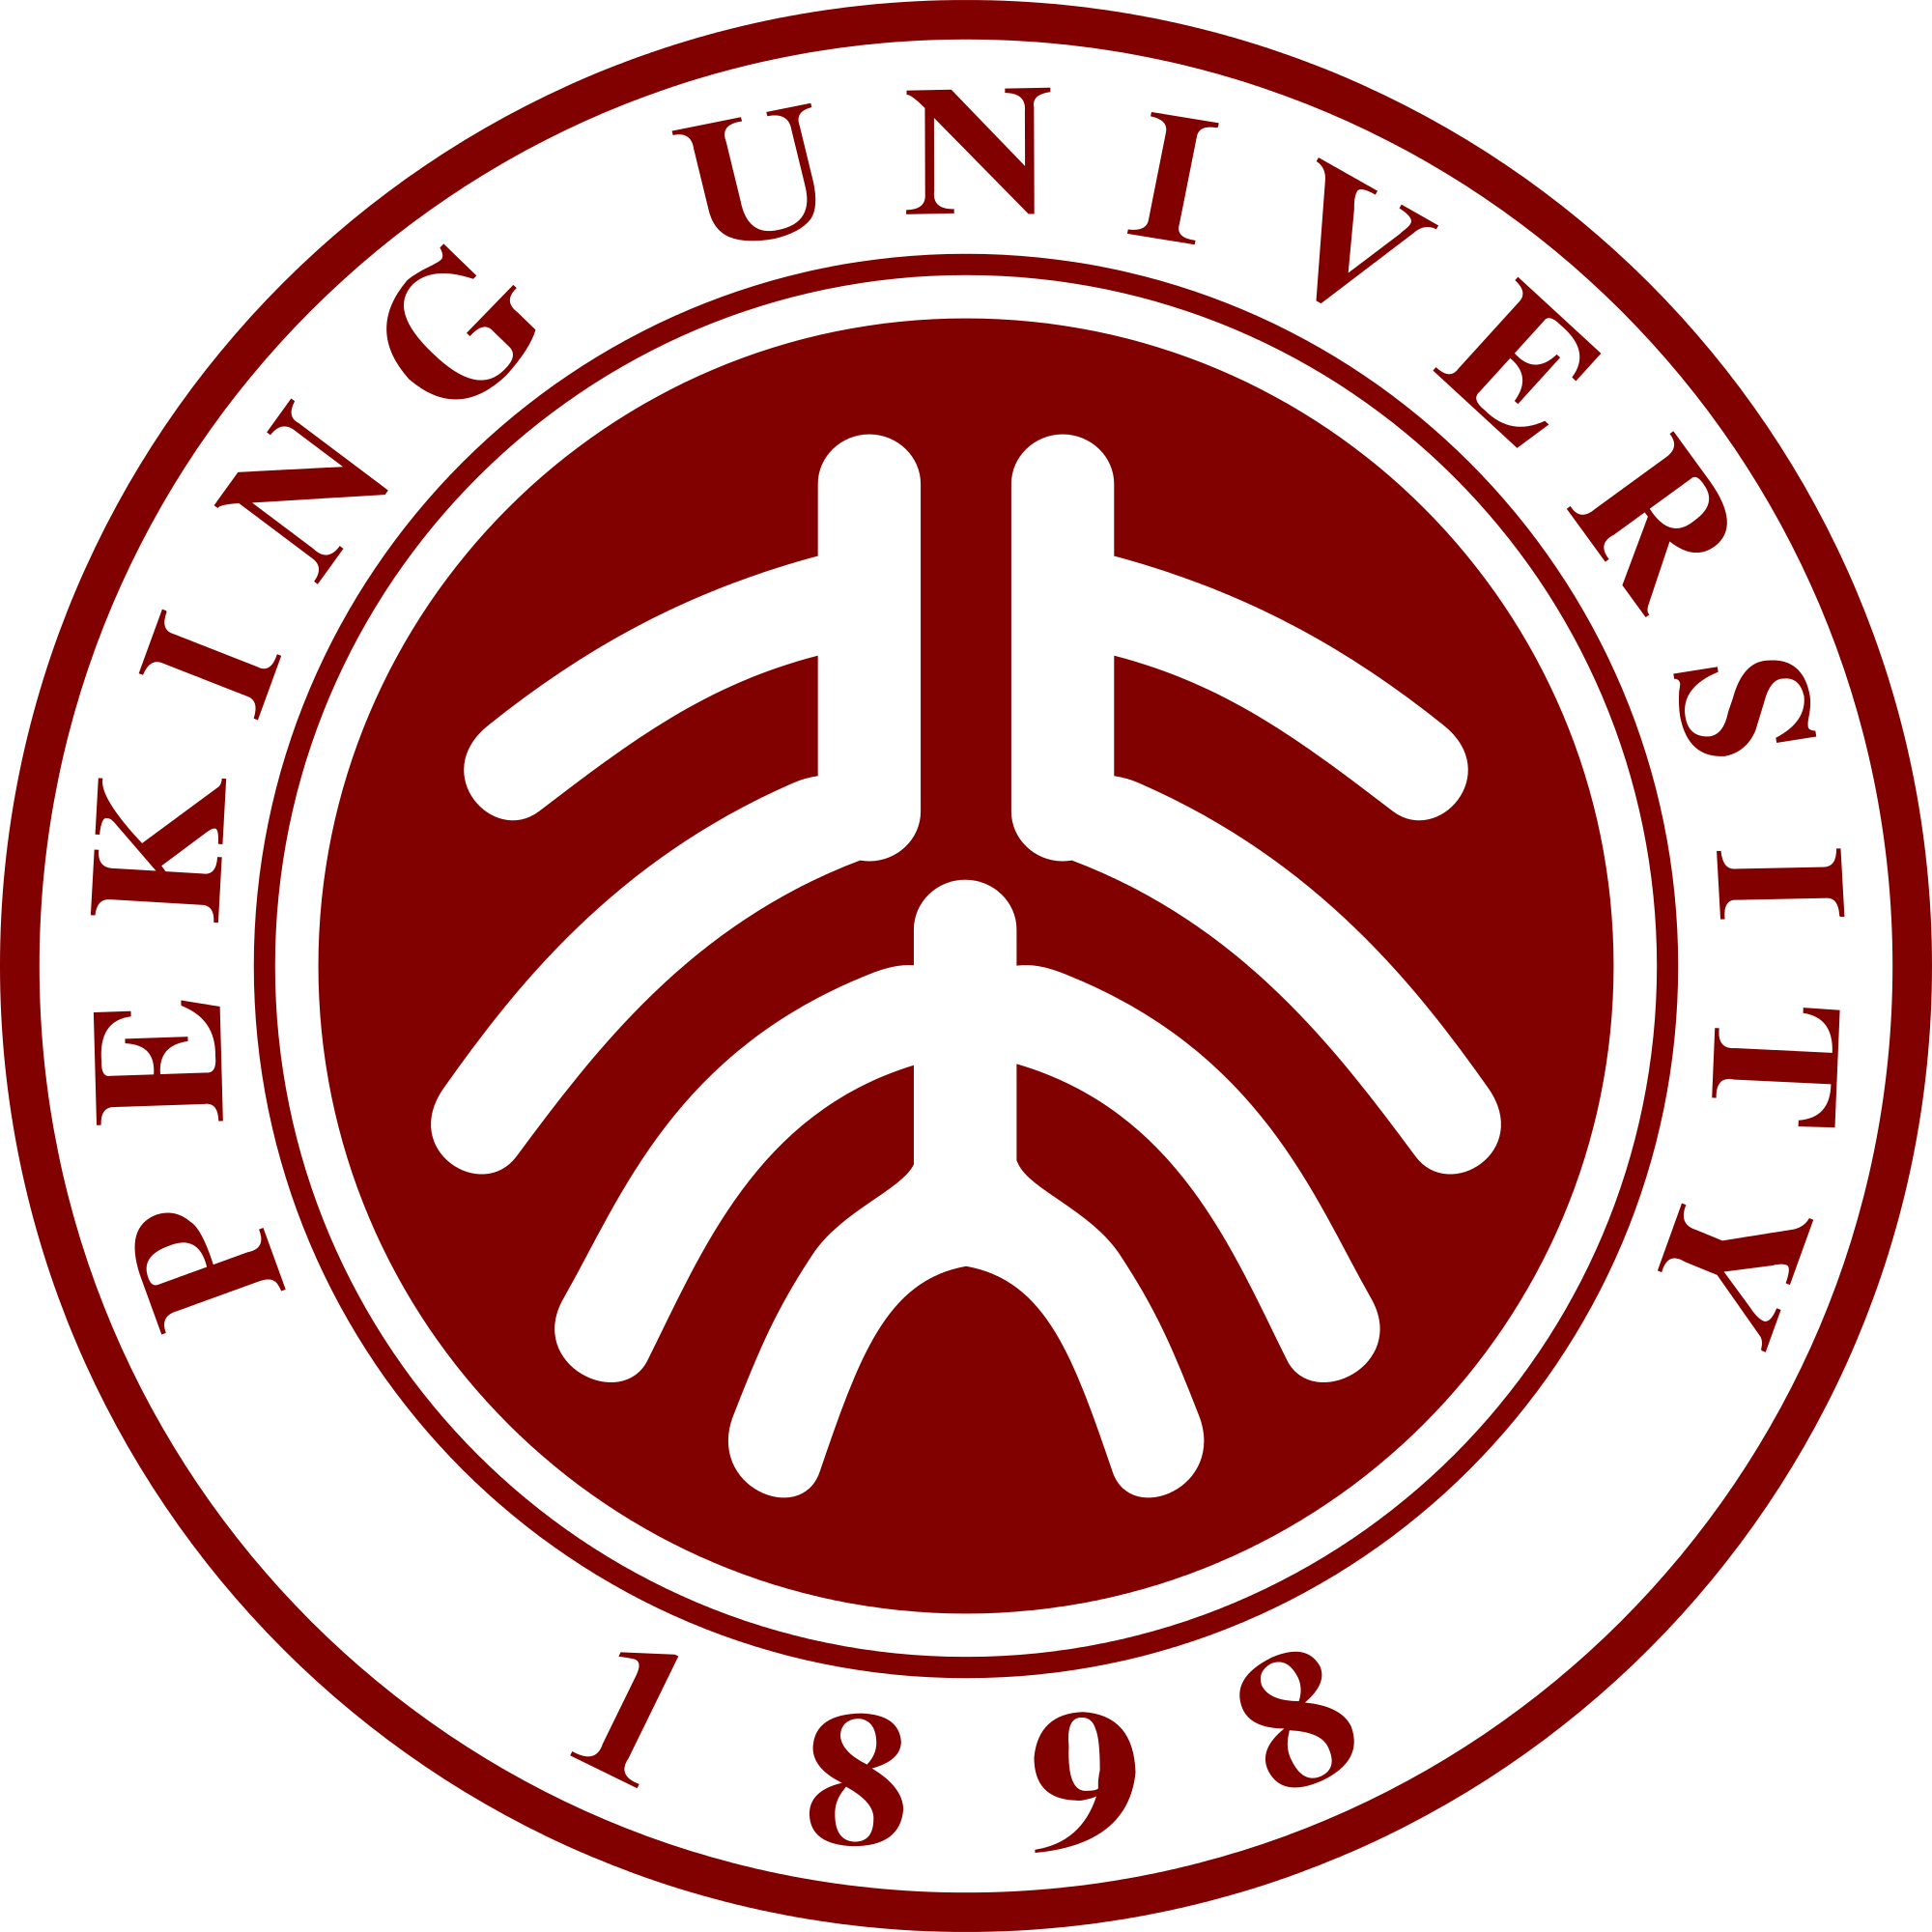 peking university phd international relations